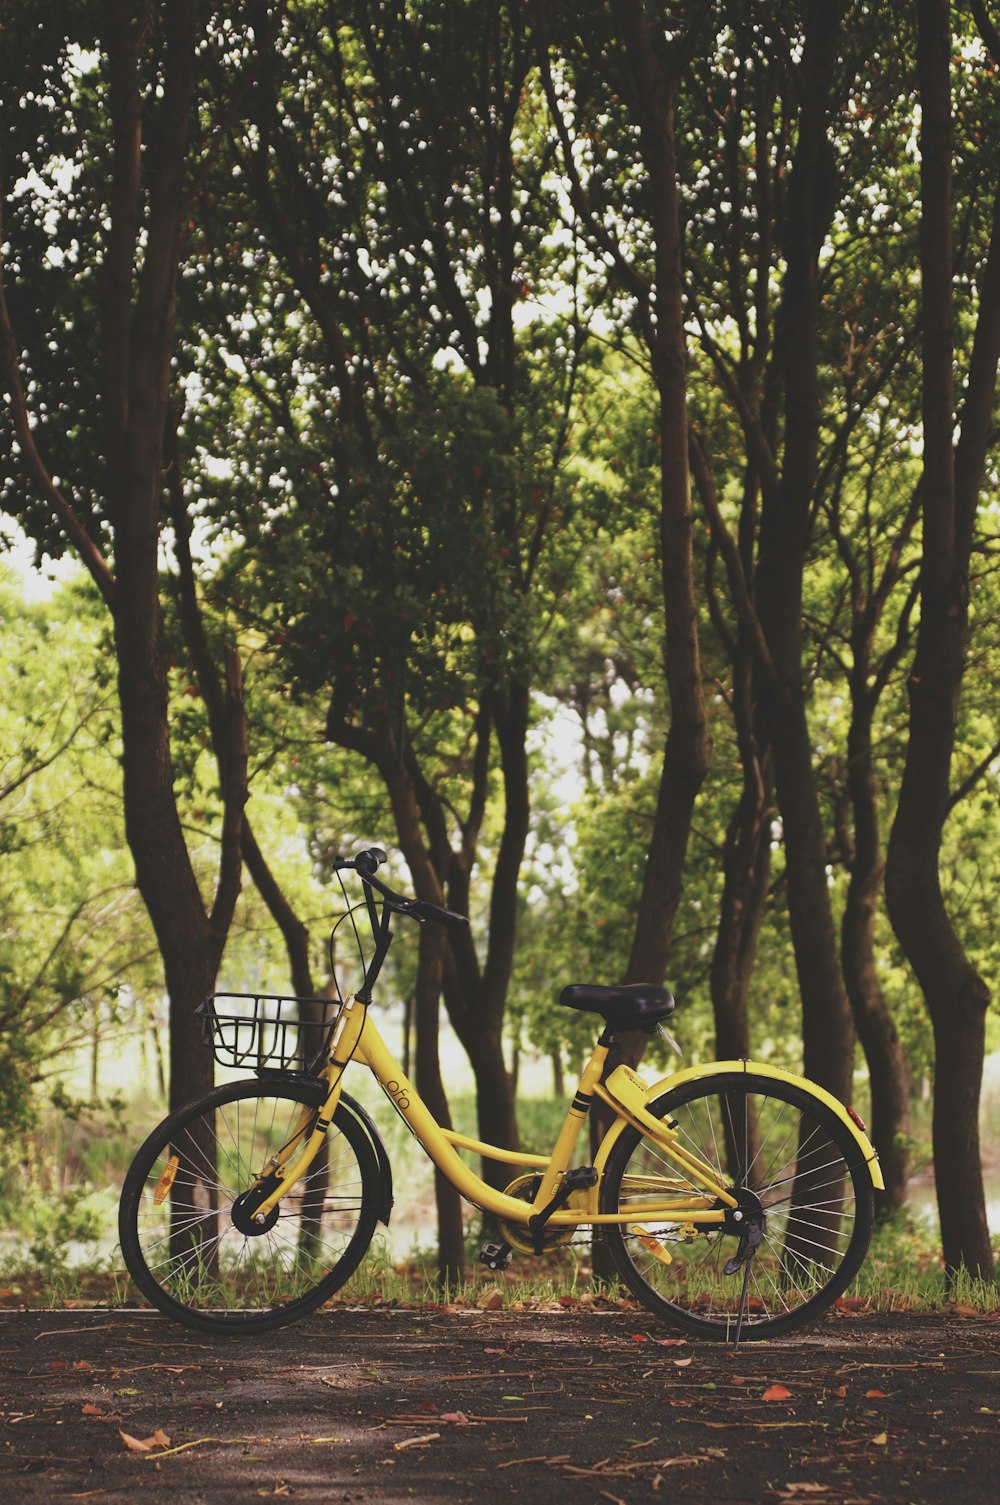 black and yellow city bike near trees at daytime